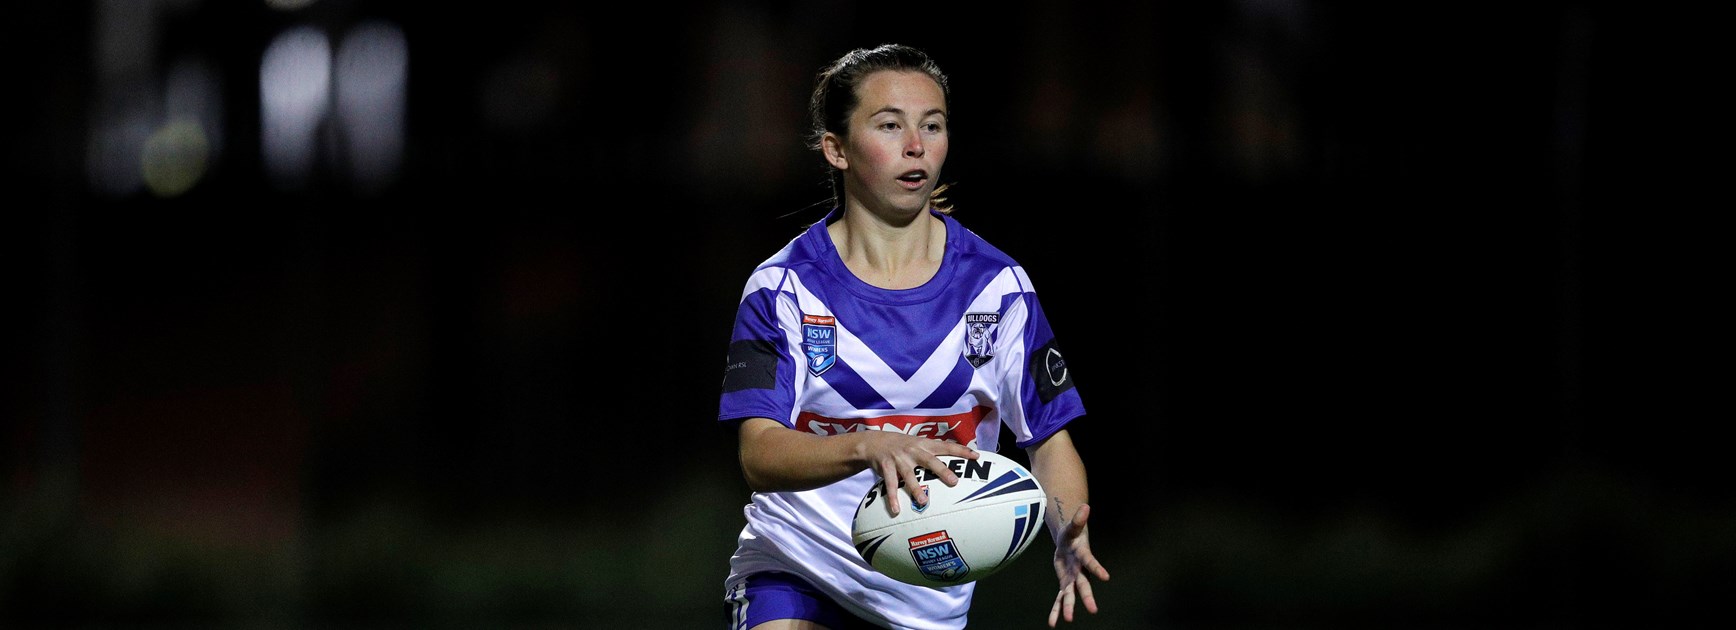 Nine new faces for NSW Women's Origin squad